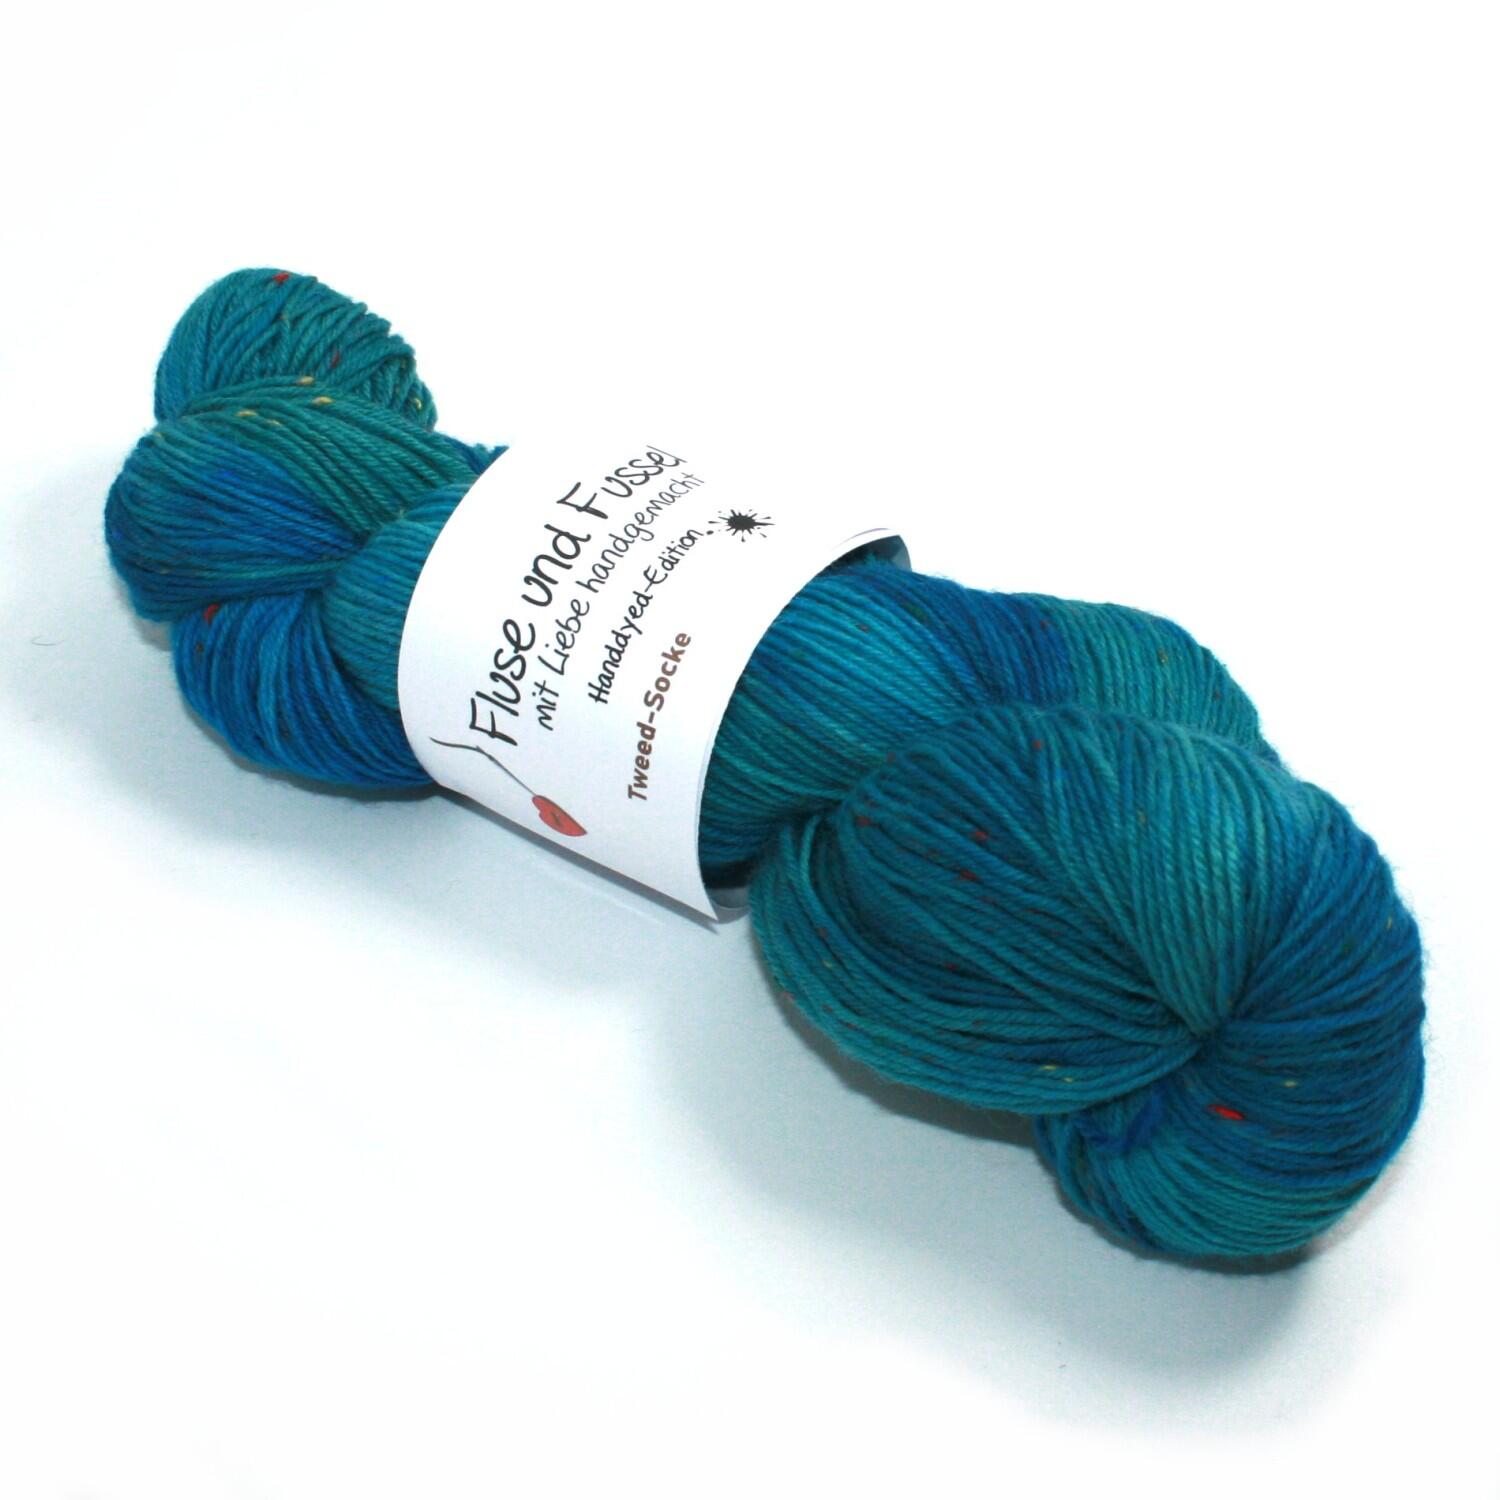 FuF Handdyed-Edition - Tweed Sockenwolle 100g Farbe: Labradorit